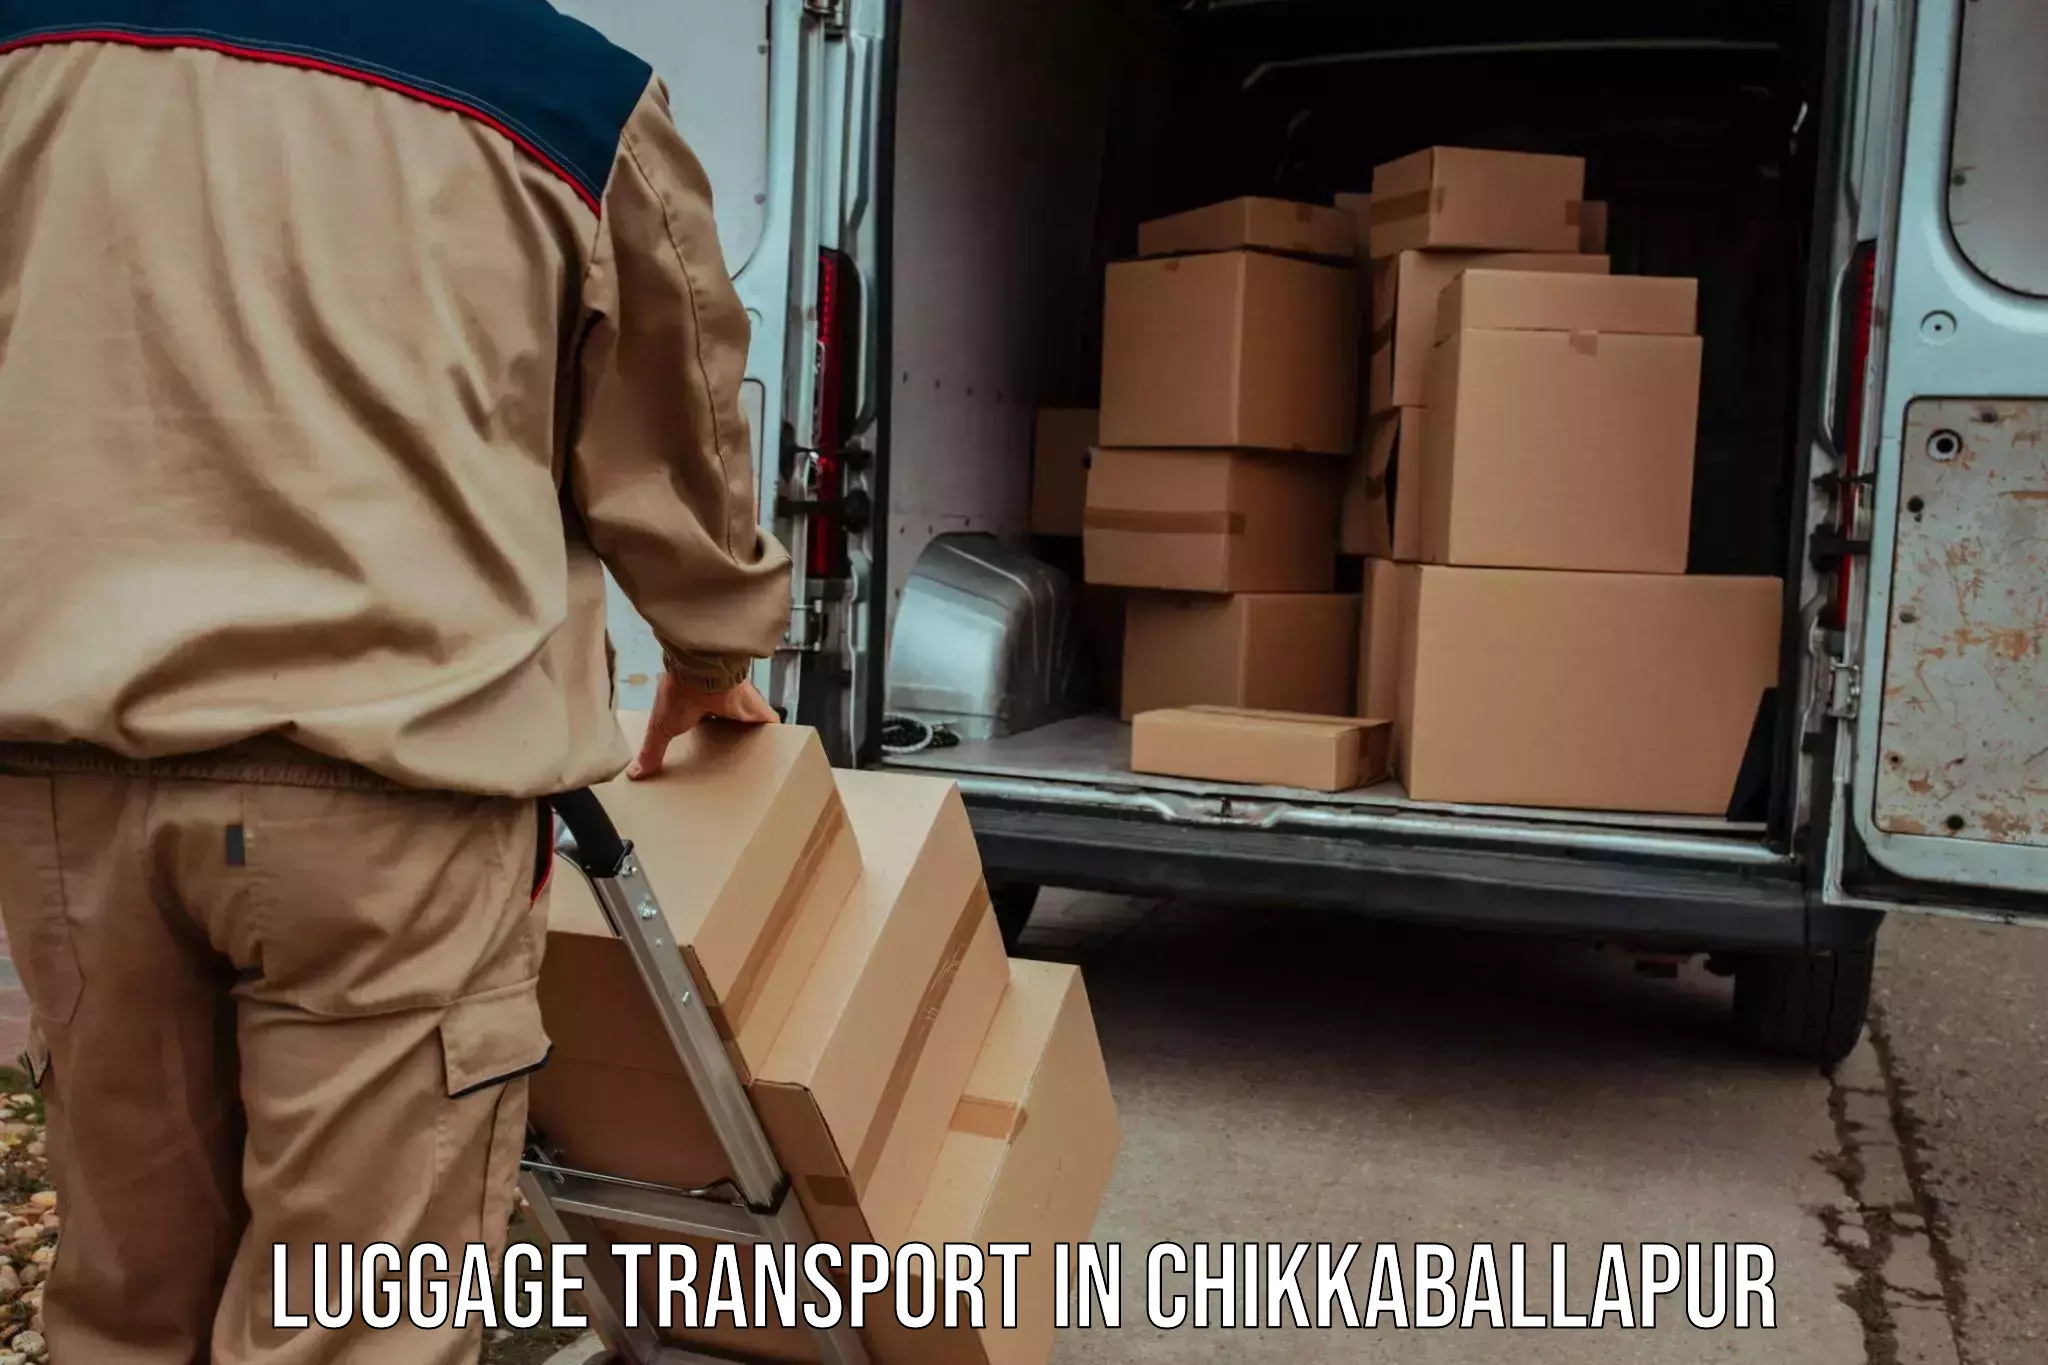 Heavy luggage shipping in Chikkaballapur